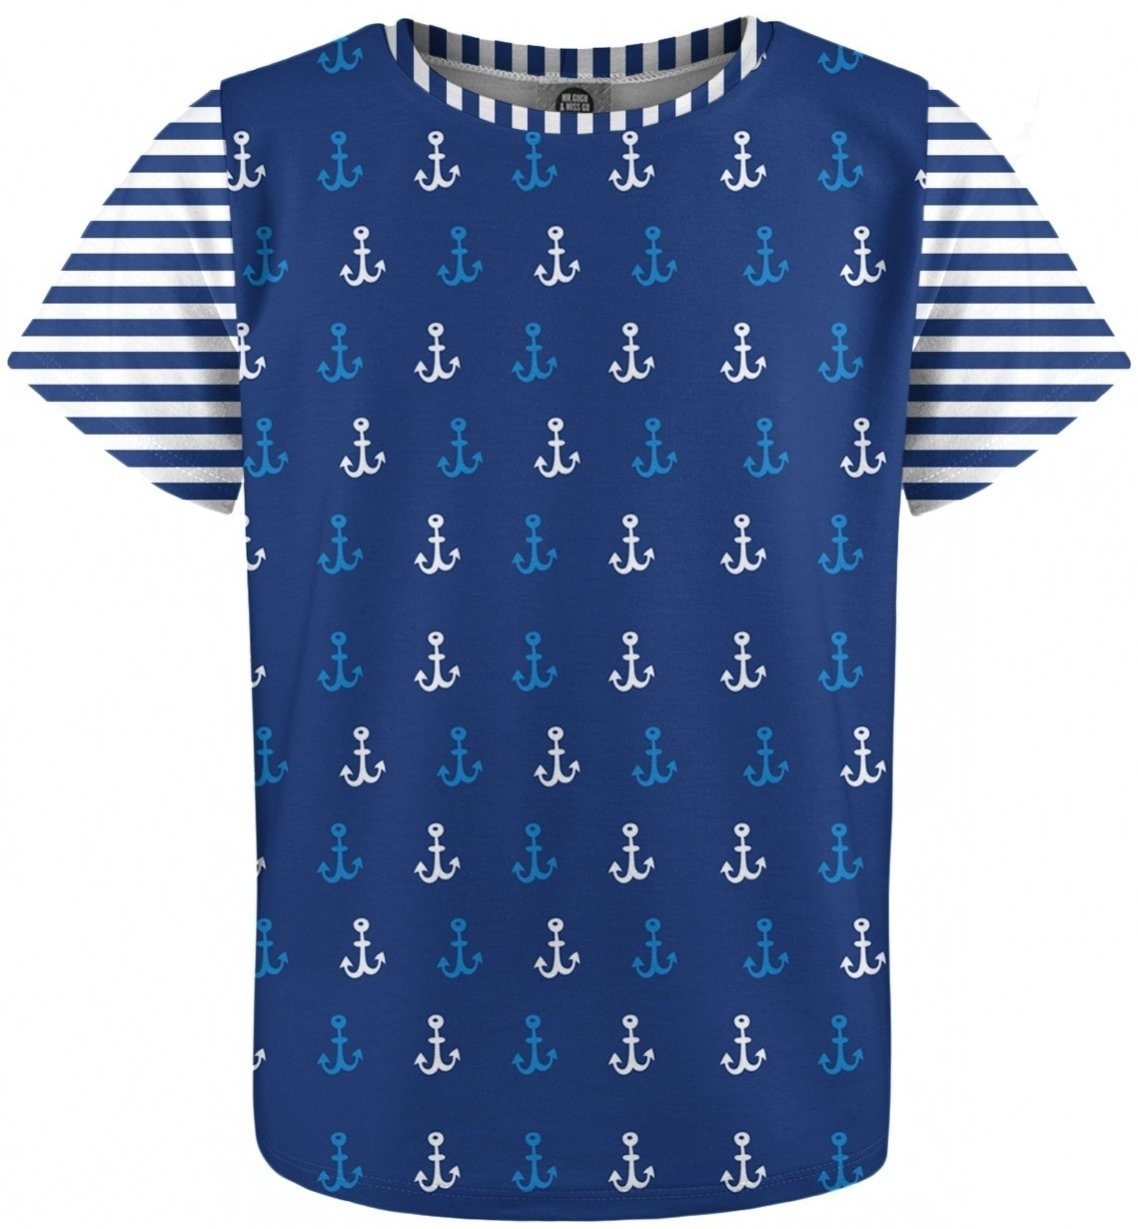 Oblačila za otroke Mr. Gugu and Miss Go Ocean Pattern Kids T-Shirt Fullprint 8 - 10 let